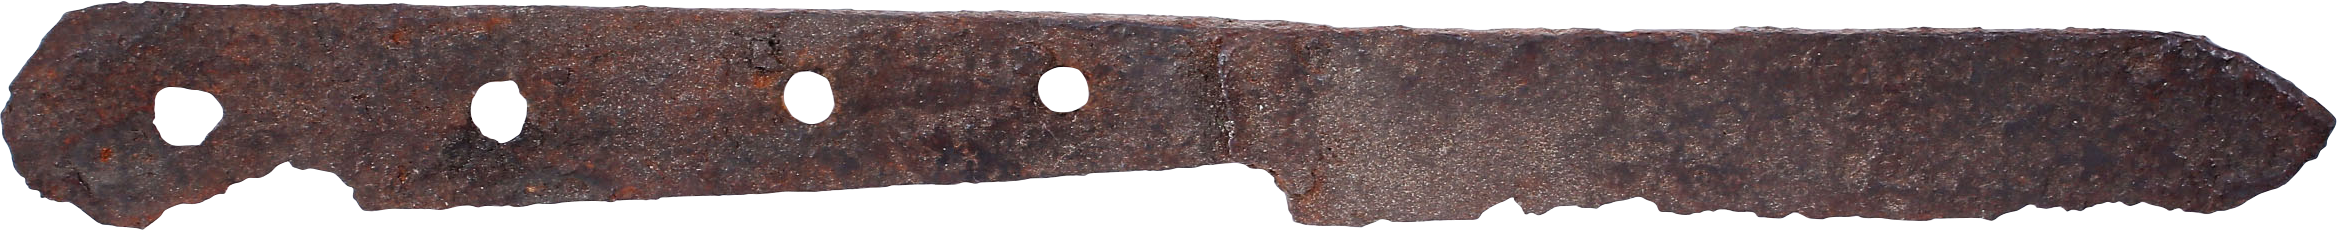 CRUSADER’S SIDE KNIFE - Fagan Arms